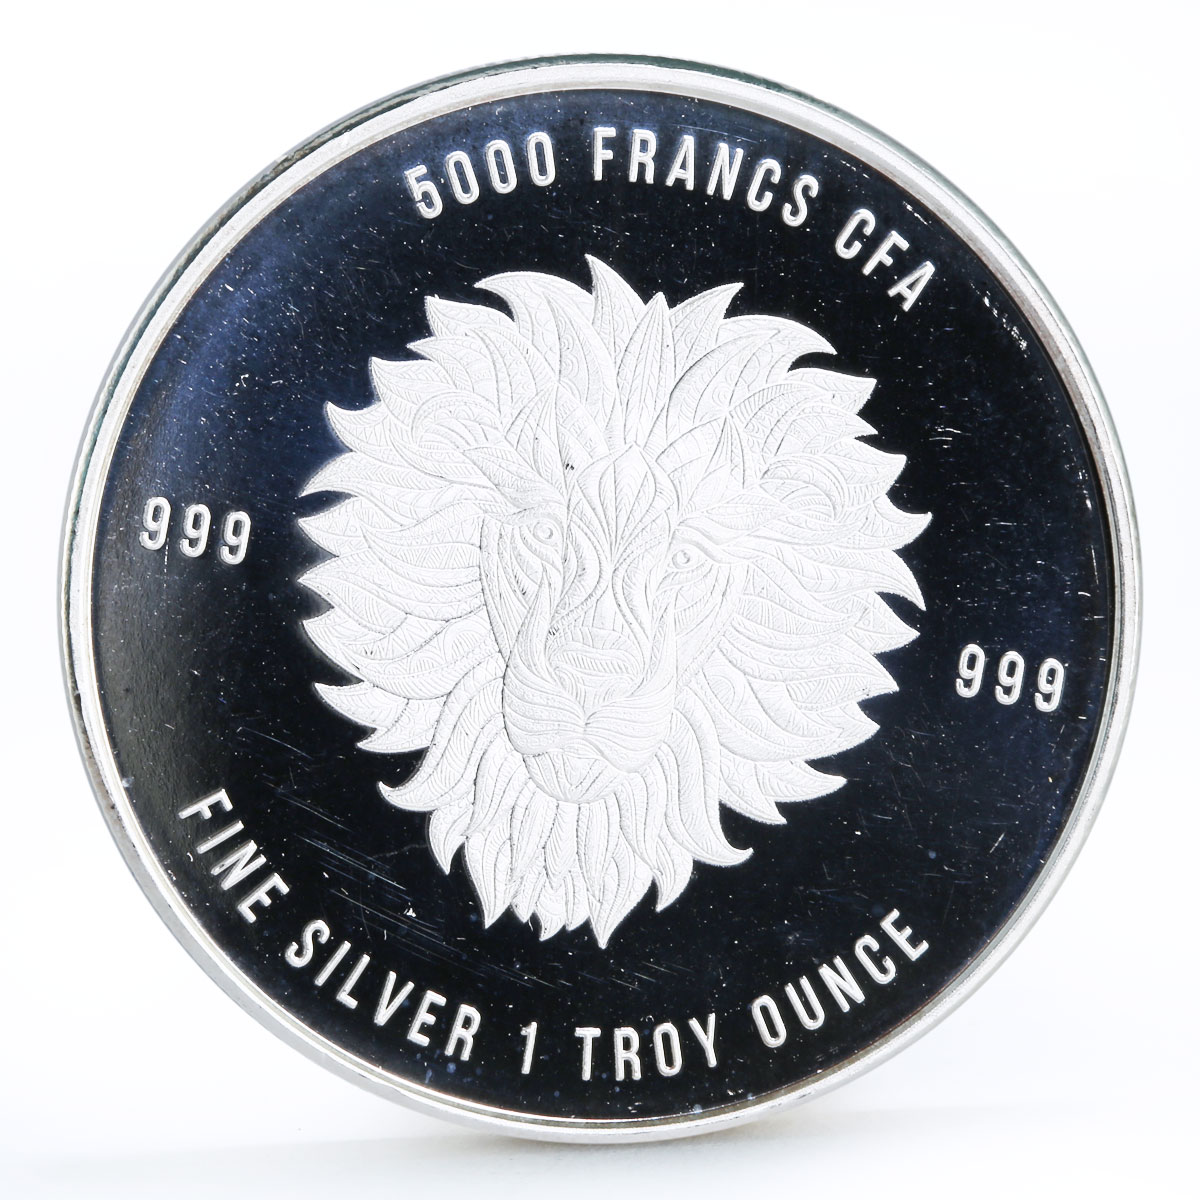 Chad 5000 francs Wildlife Mandala Lion proof silver coin 2018